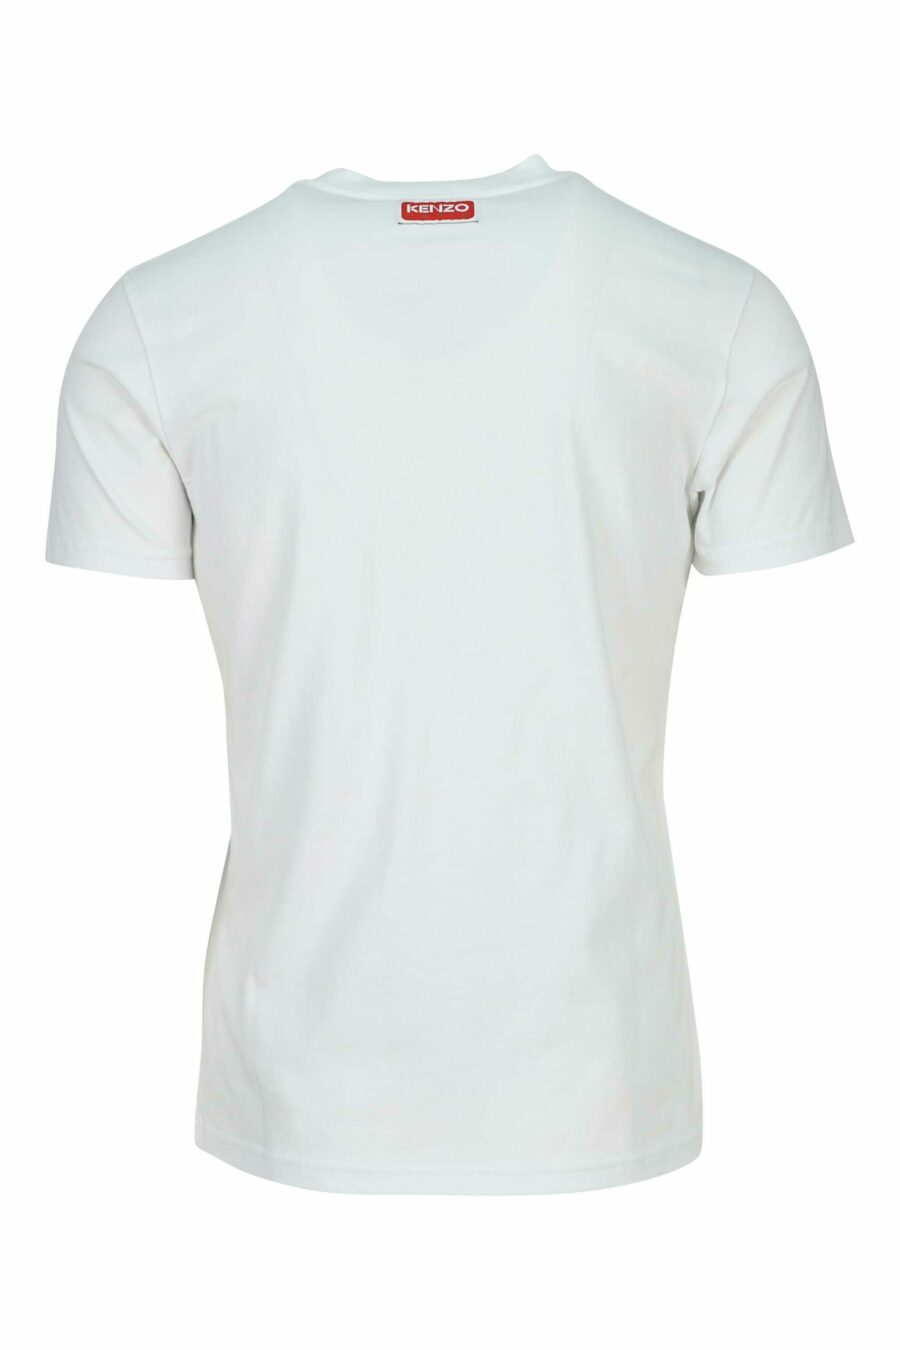 T-shirt blanc "slim" avec logo tigre mini - 3612230625013 1 échelle